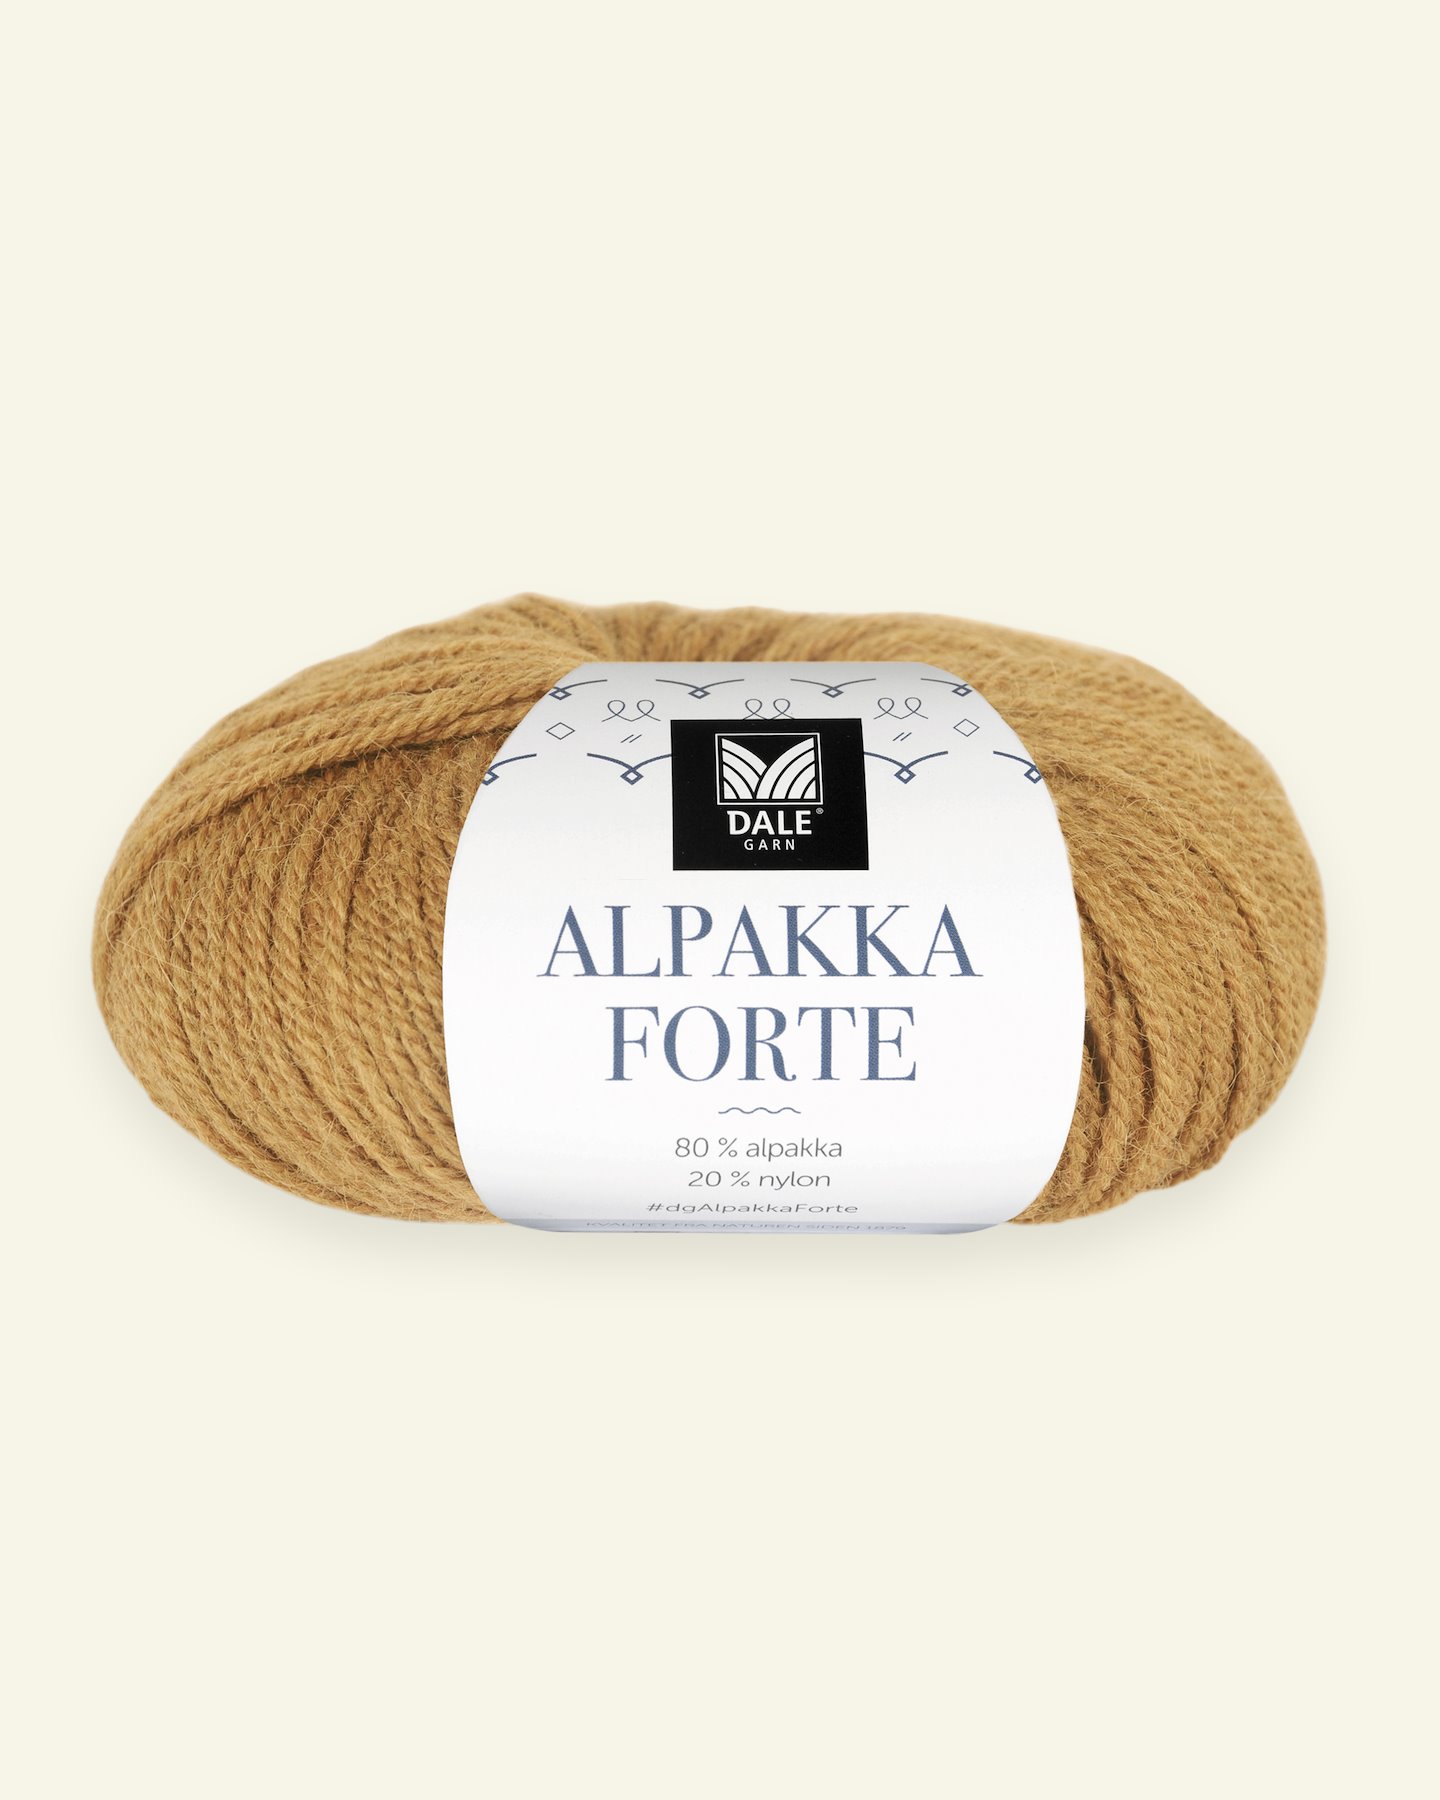 Dale Garn, alpackagarn "Alpakka Forte", majsgul mel. (718) 90000451_pack